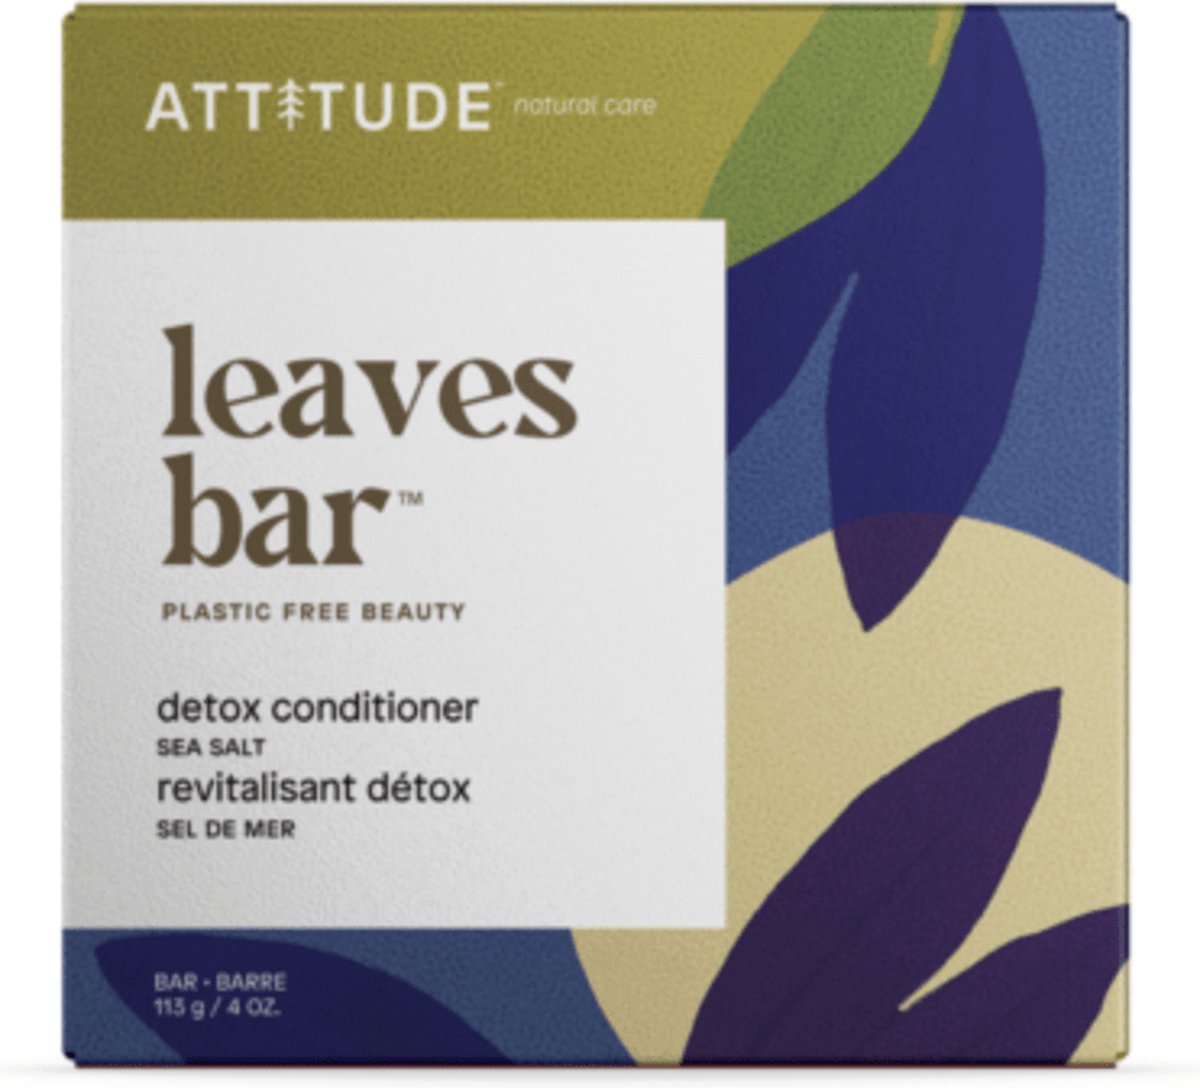 Attitude leaves bar detox conditioner Zee zout